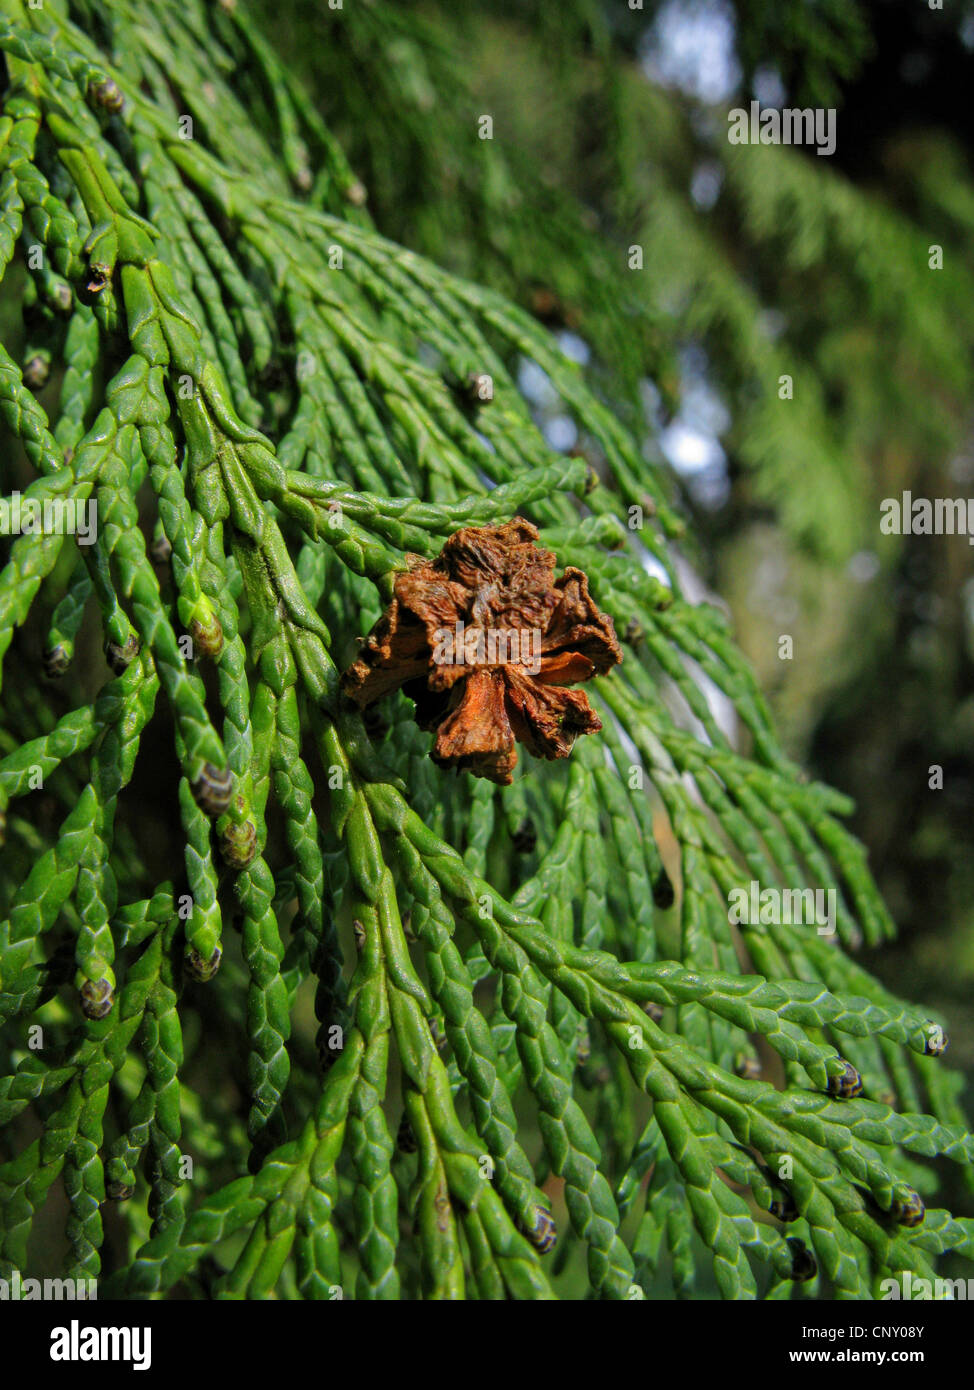 Lawson Zypresse, Port Orford Zeder (Chamaecyparis Lawsoniana), Kegel auf einem Ast Stockfoto